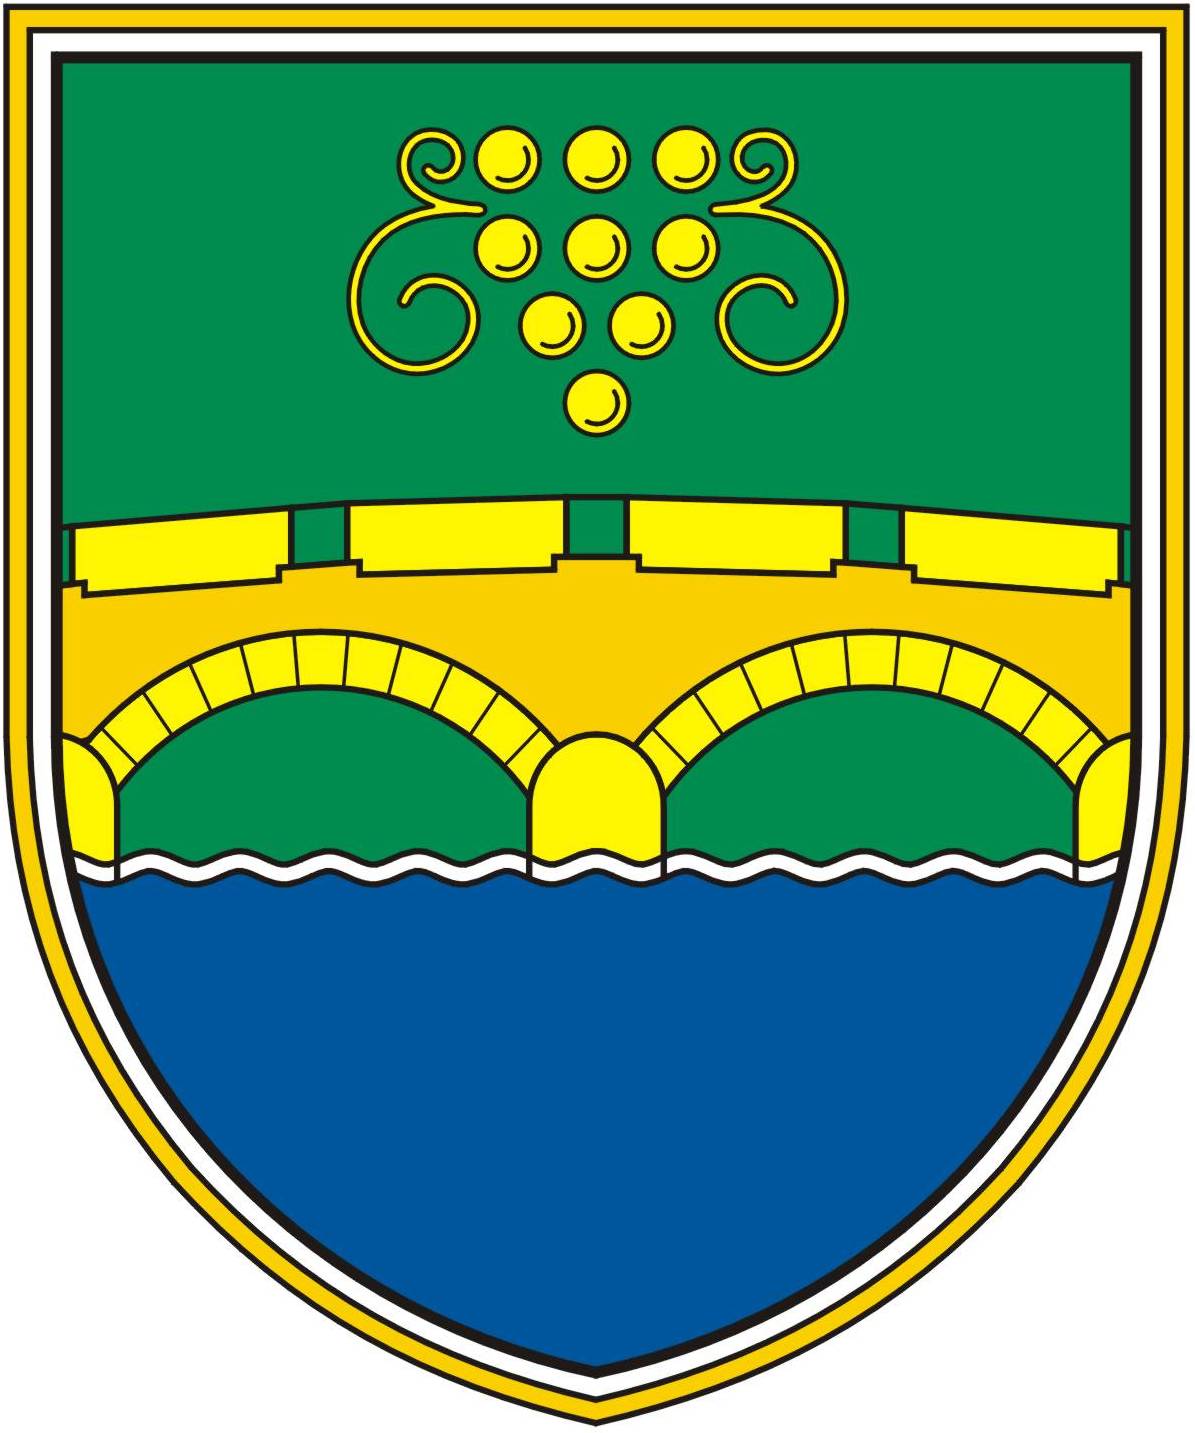 Grb Občina Škocjan.jpg